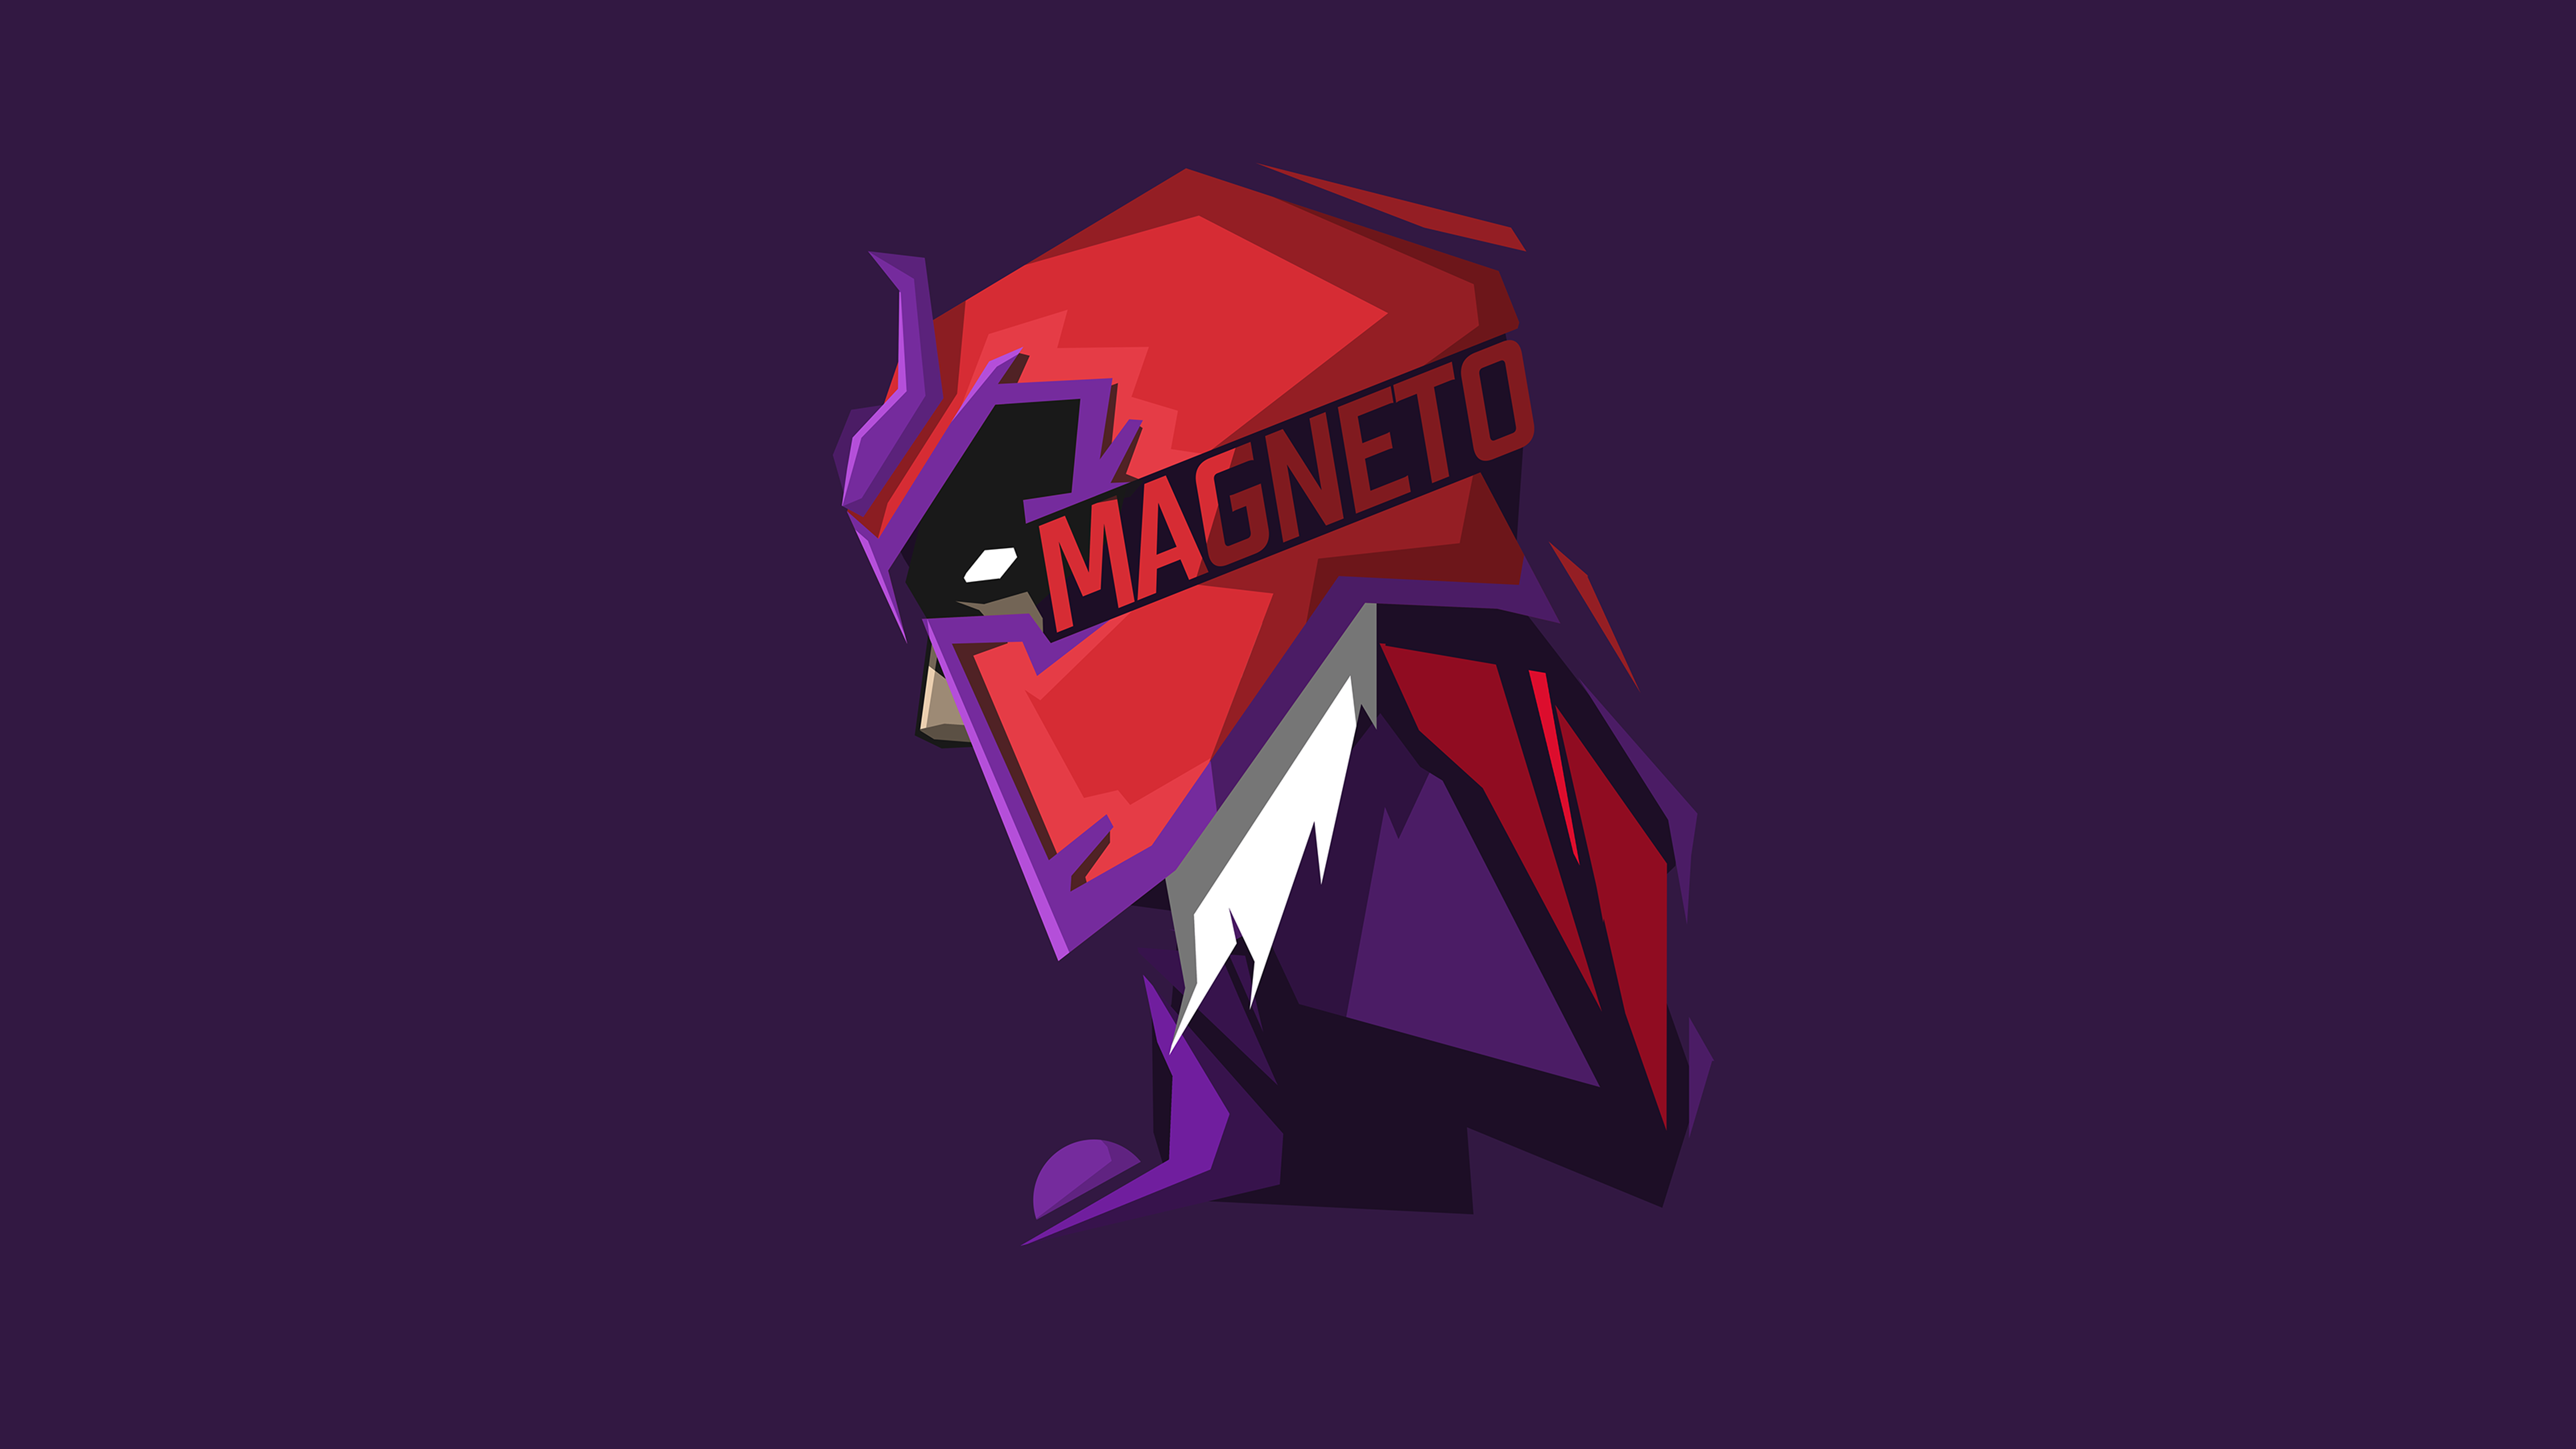 Magneto (Marvel Comics) 8k Ultra HD Wallpaper | Background ...